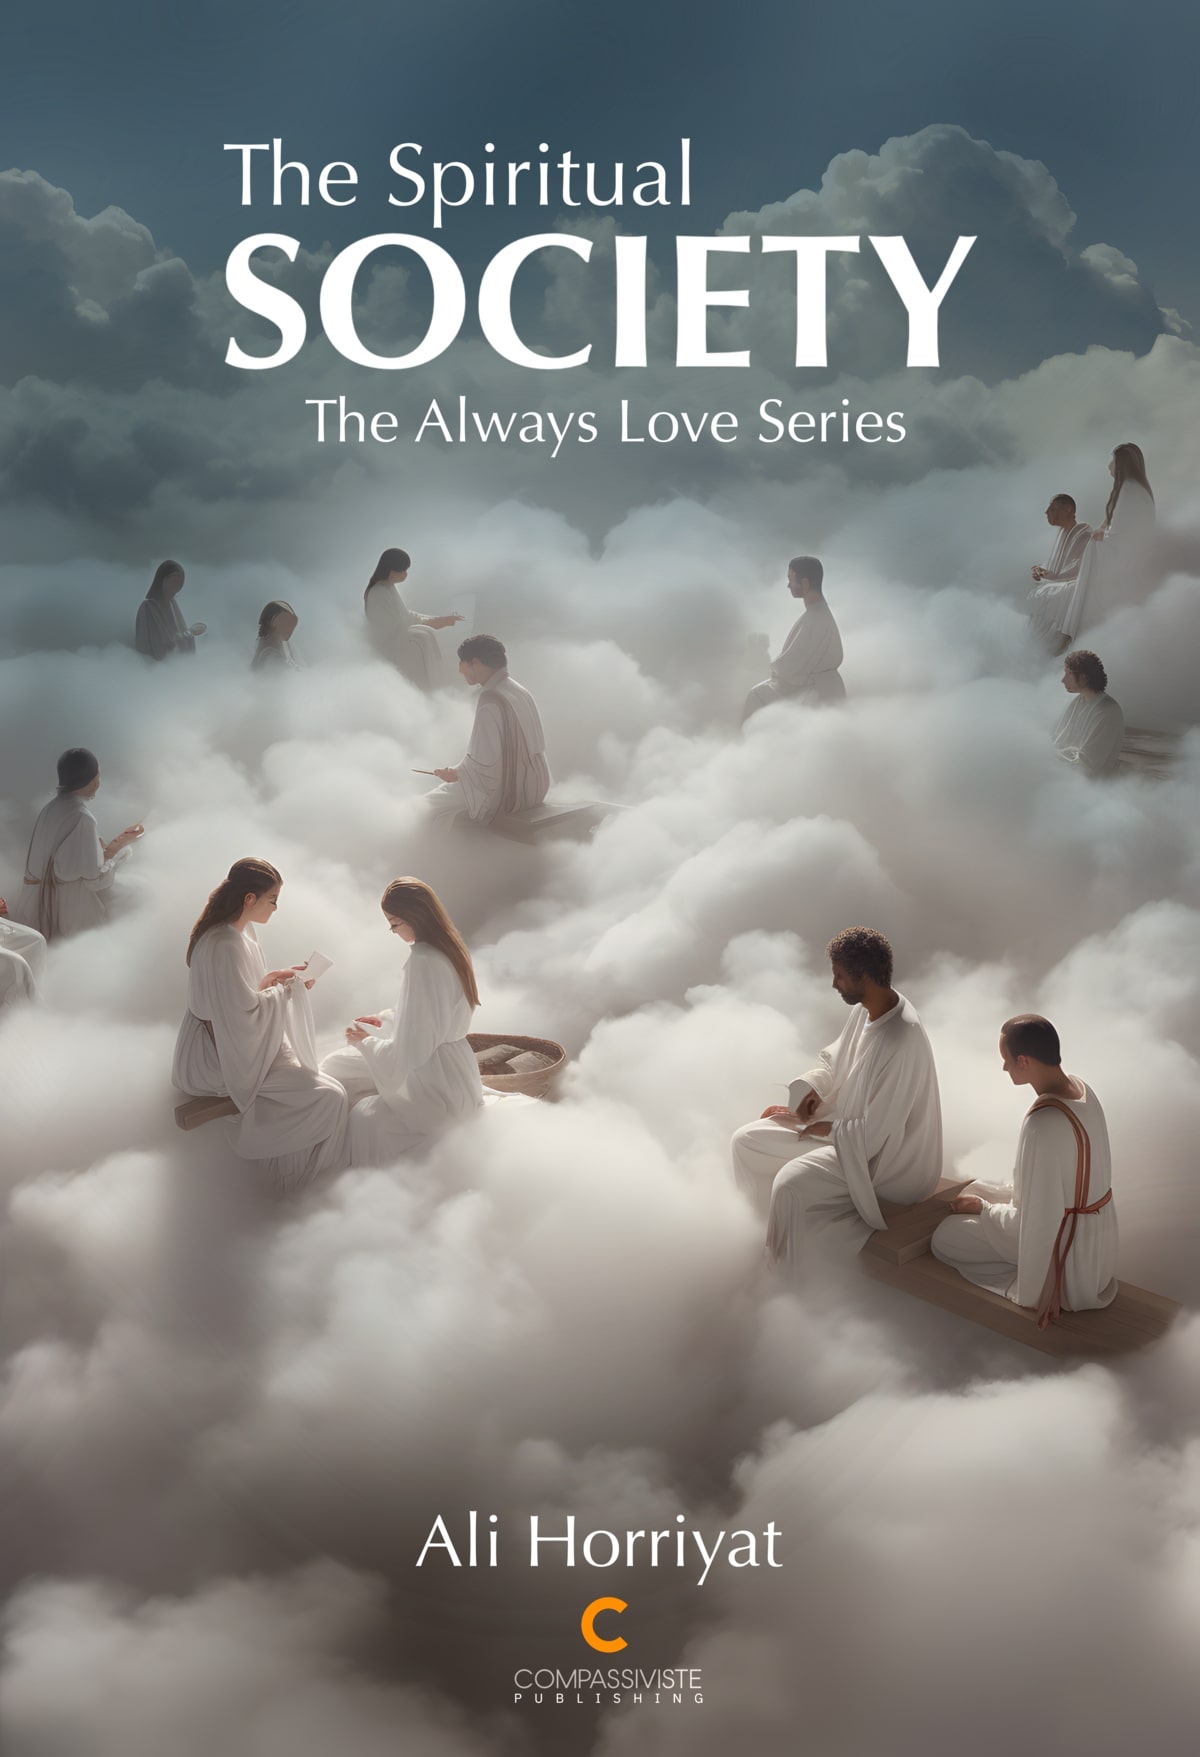 Book cover of The Spiritual Society by Ali Horriyat